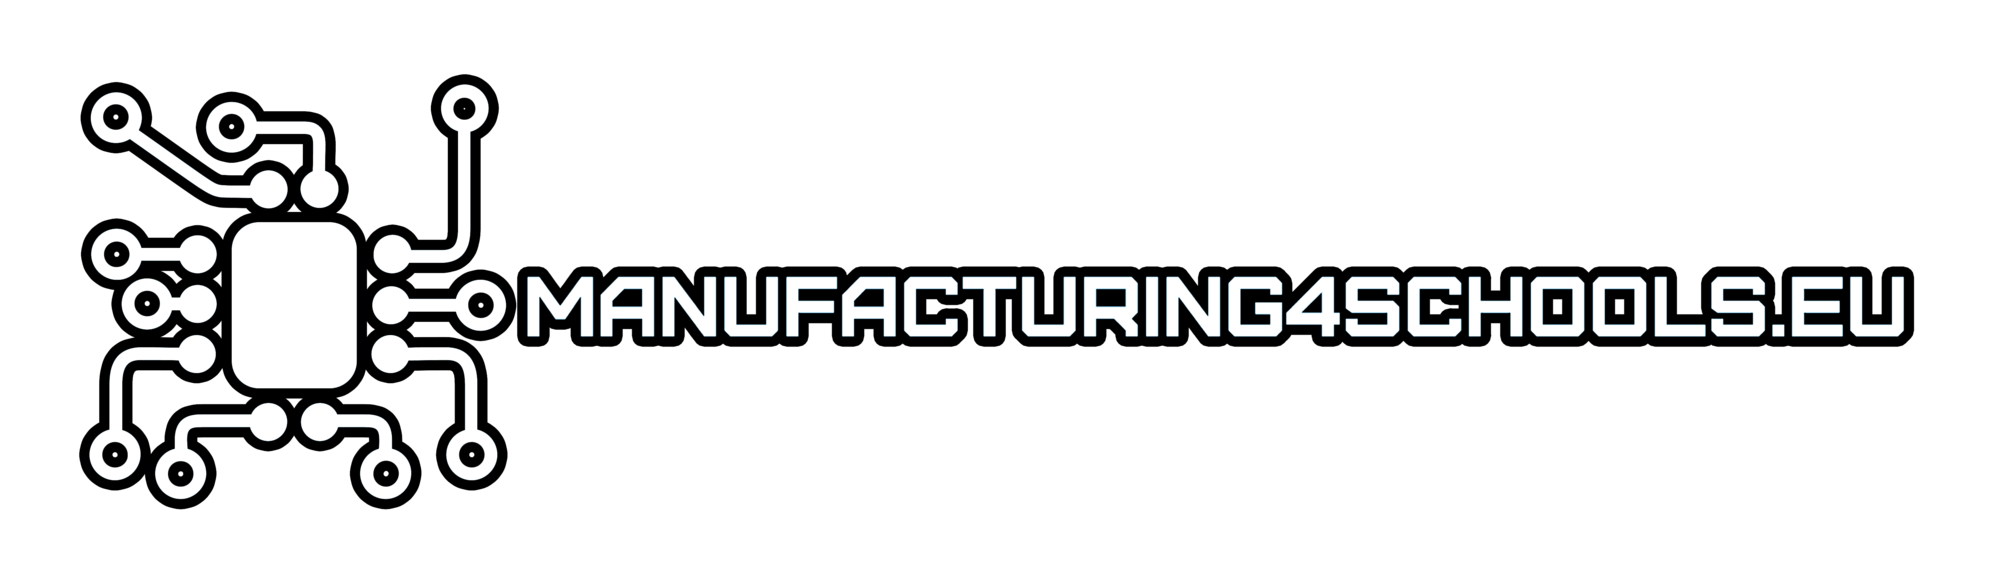 Manufacturing4schools.eu